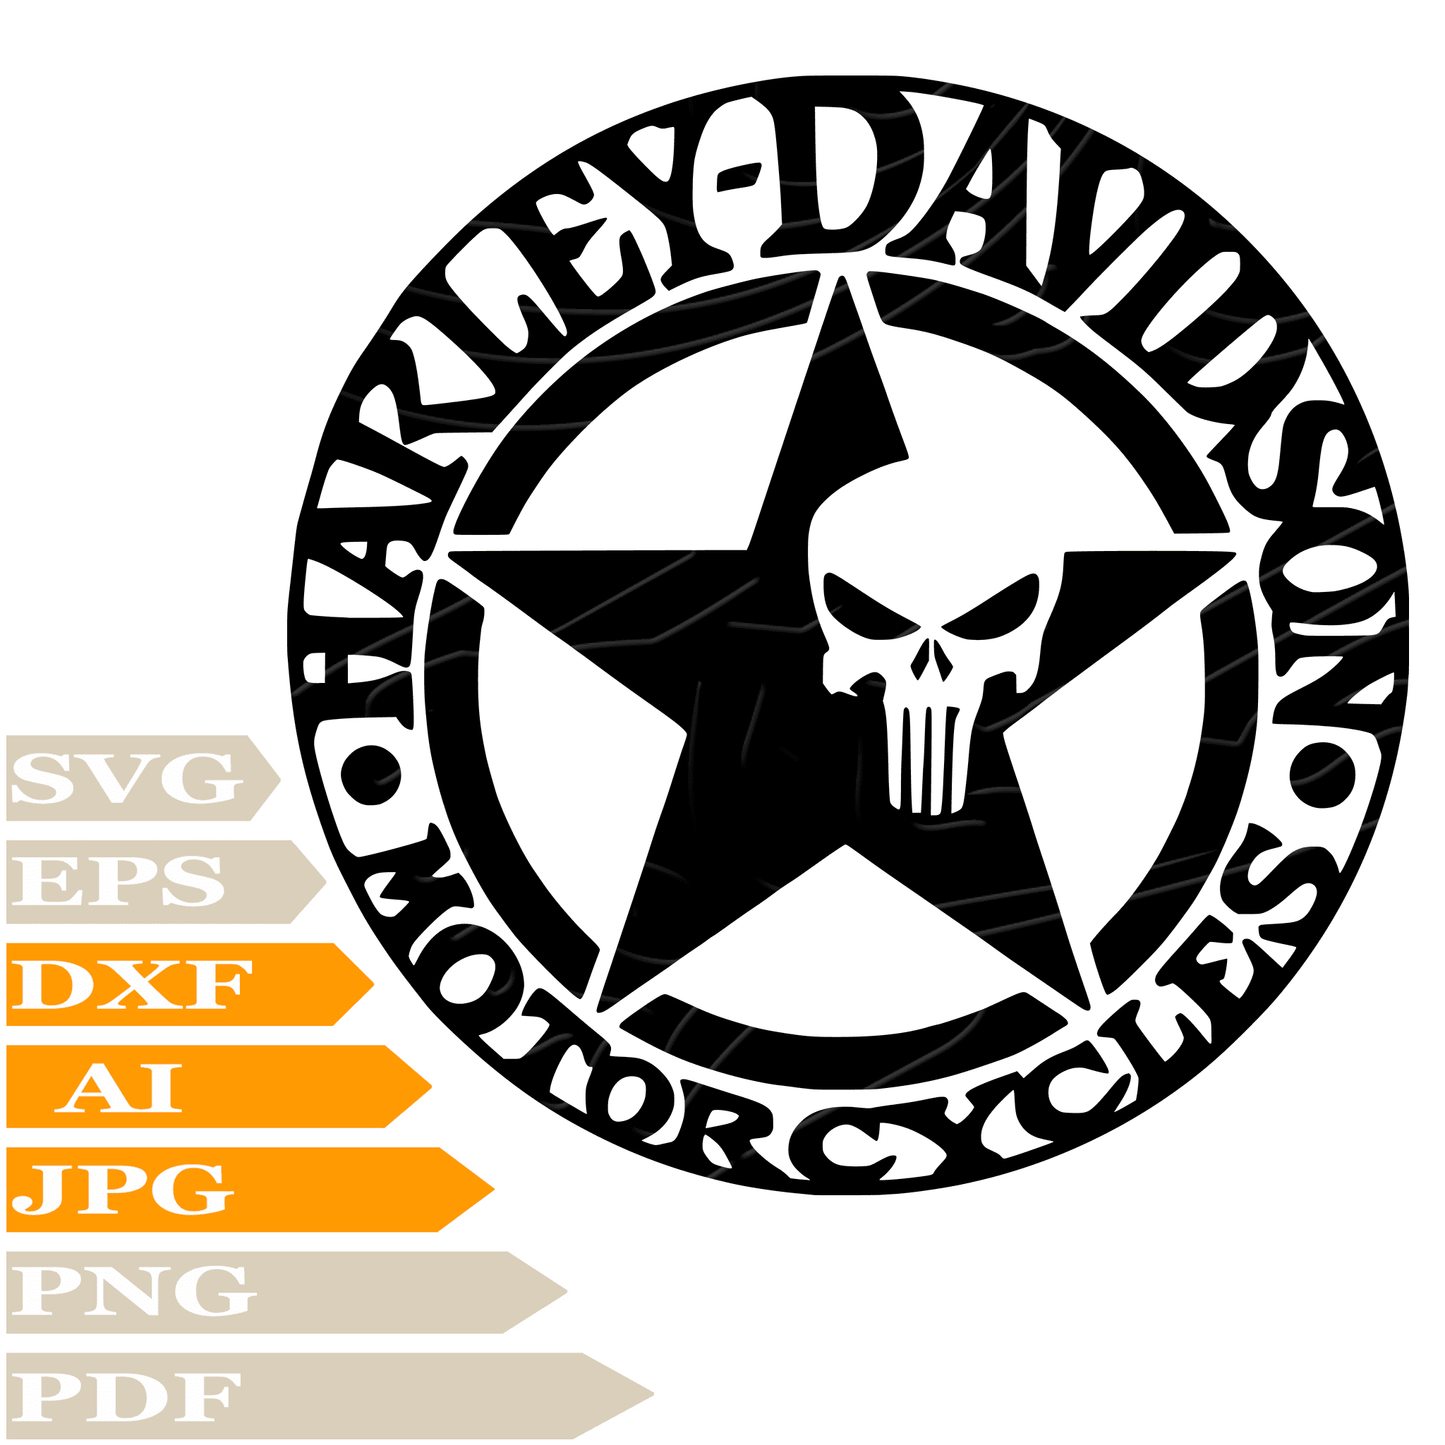 Harley-Davidson SVG File, Motorcycles Harley Davidson Logo SVG Design, Skull Harley Davidson Logo SVG, Harley-Davidson Logo Vector File, Skull Harley Davidson PNG, Image Cut, For Cricut, Clipart, Cut File, Print, Digital Download, T-Shirt, Silhouette